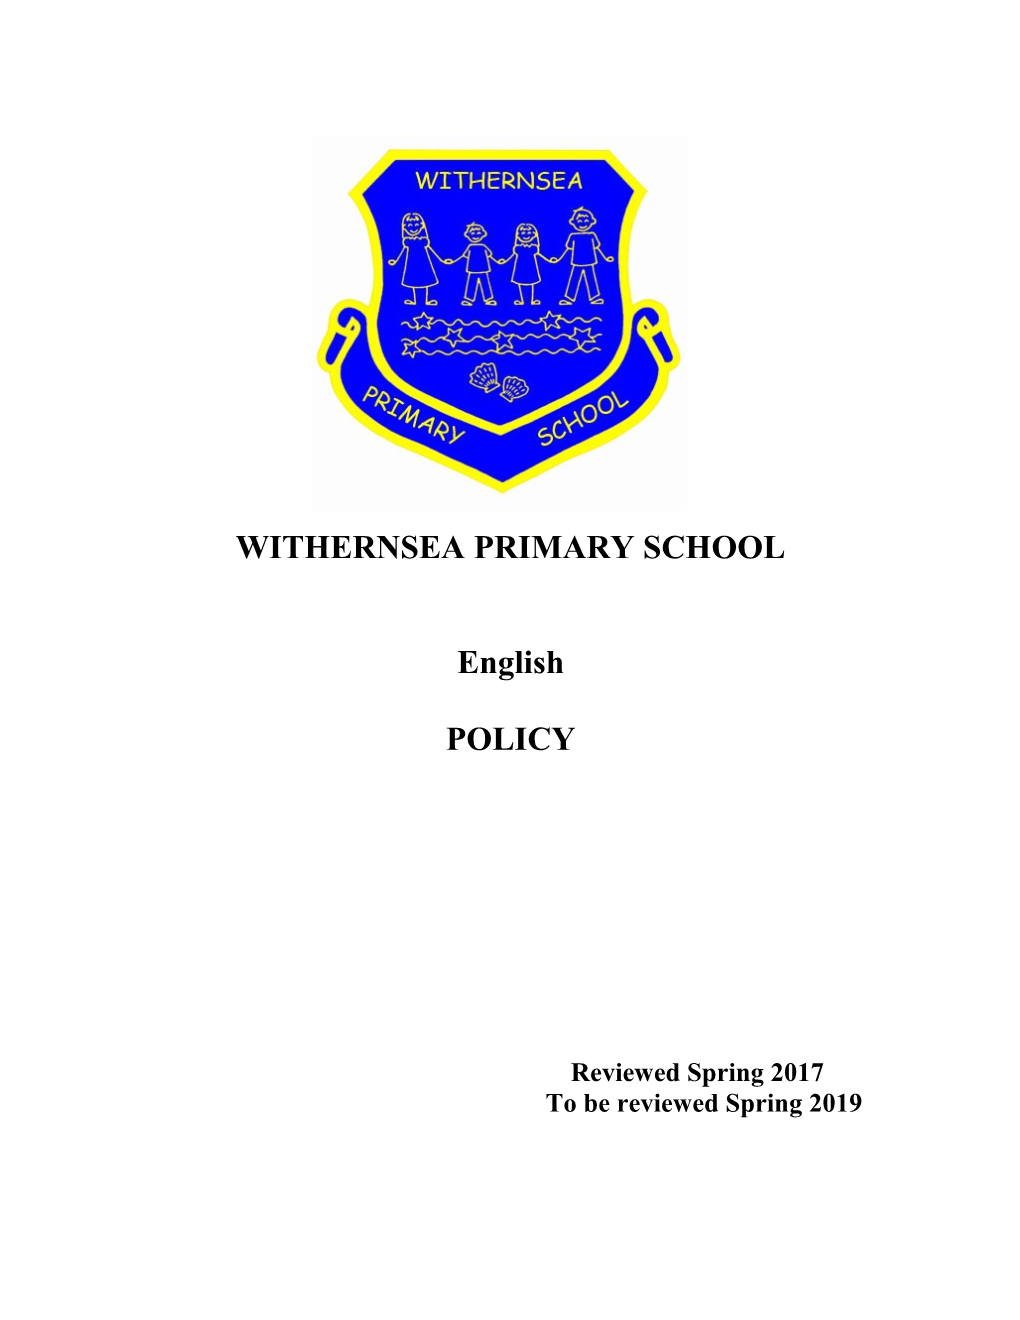 Withernsea Junior School